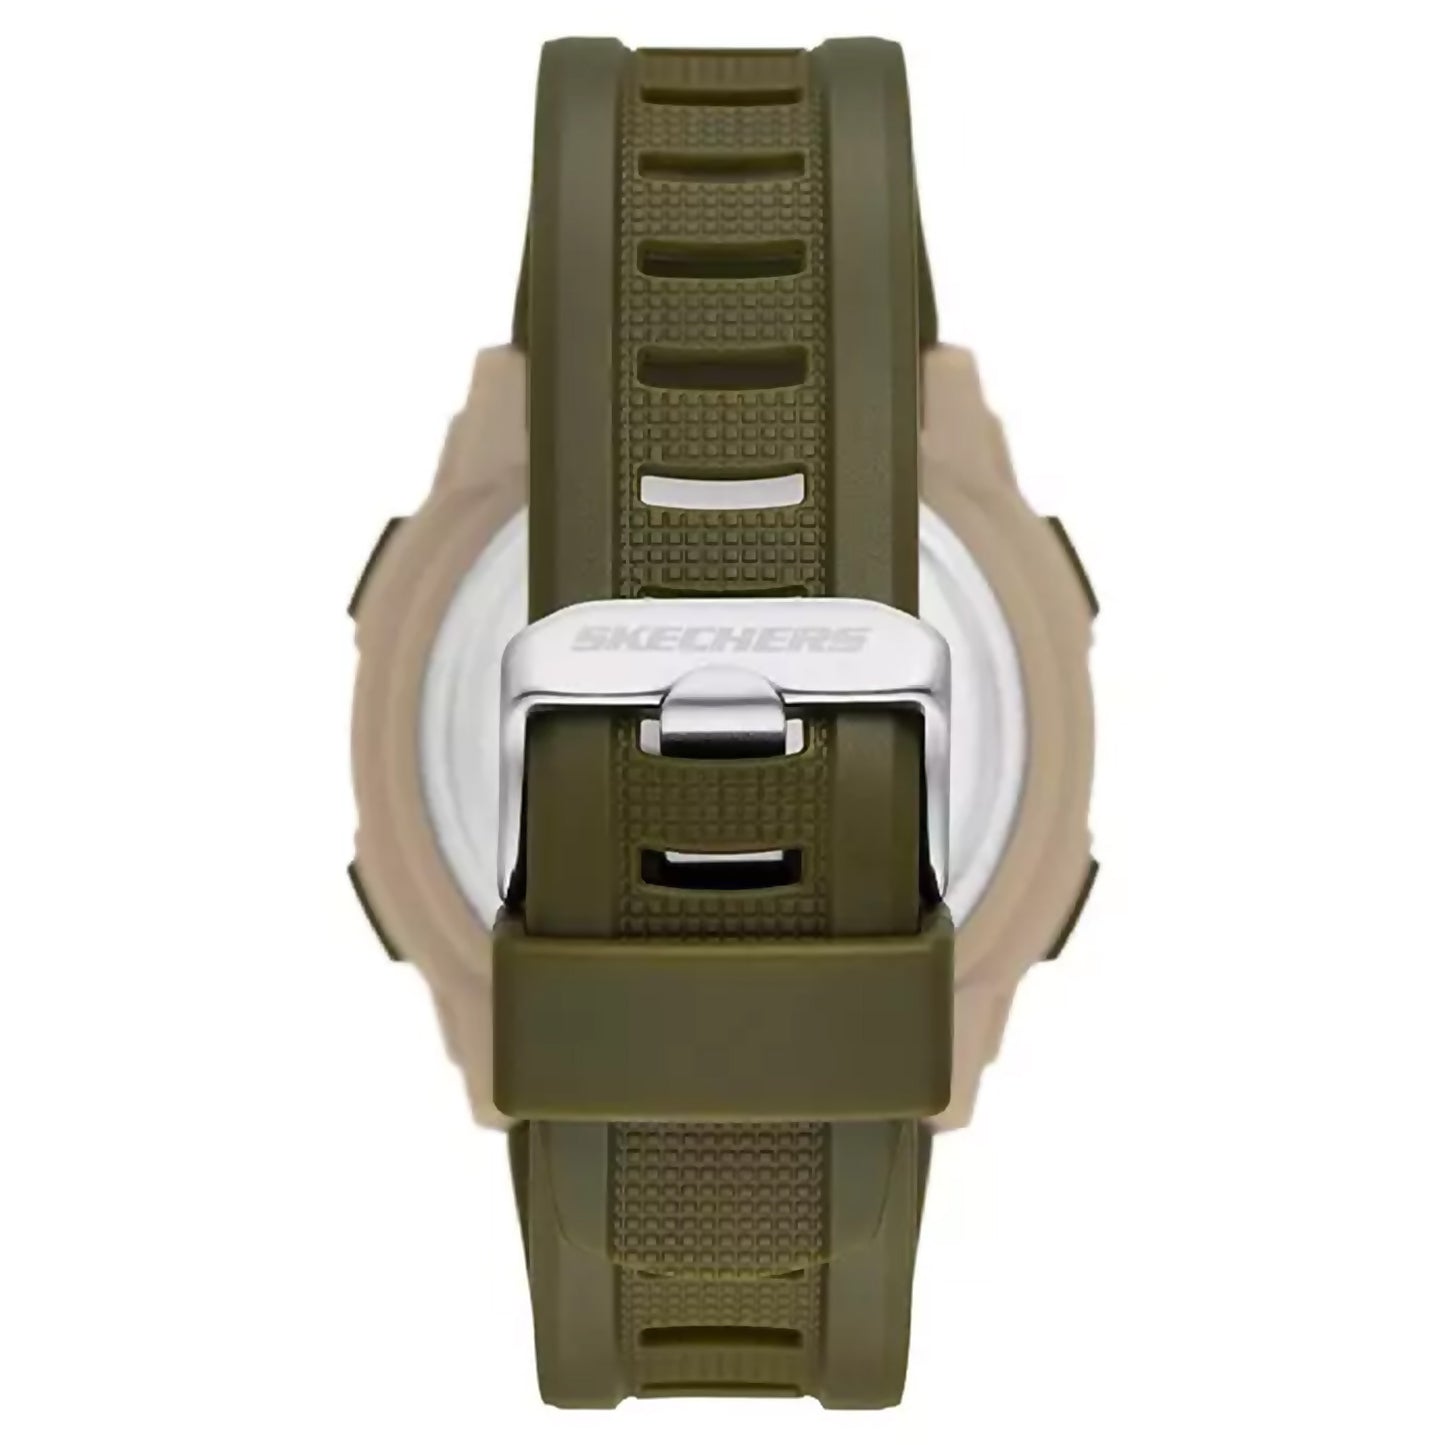 Skechers Atwater Green Polyurethane Bracelet Digital Watch SKC-SR1151